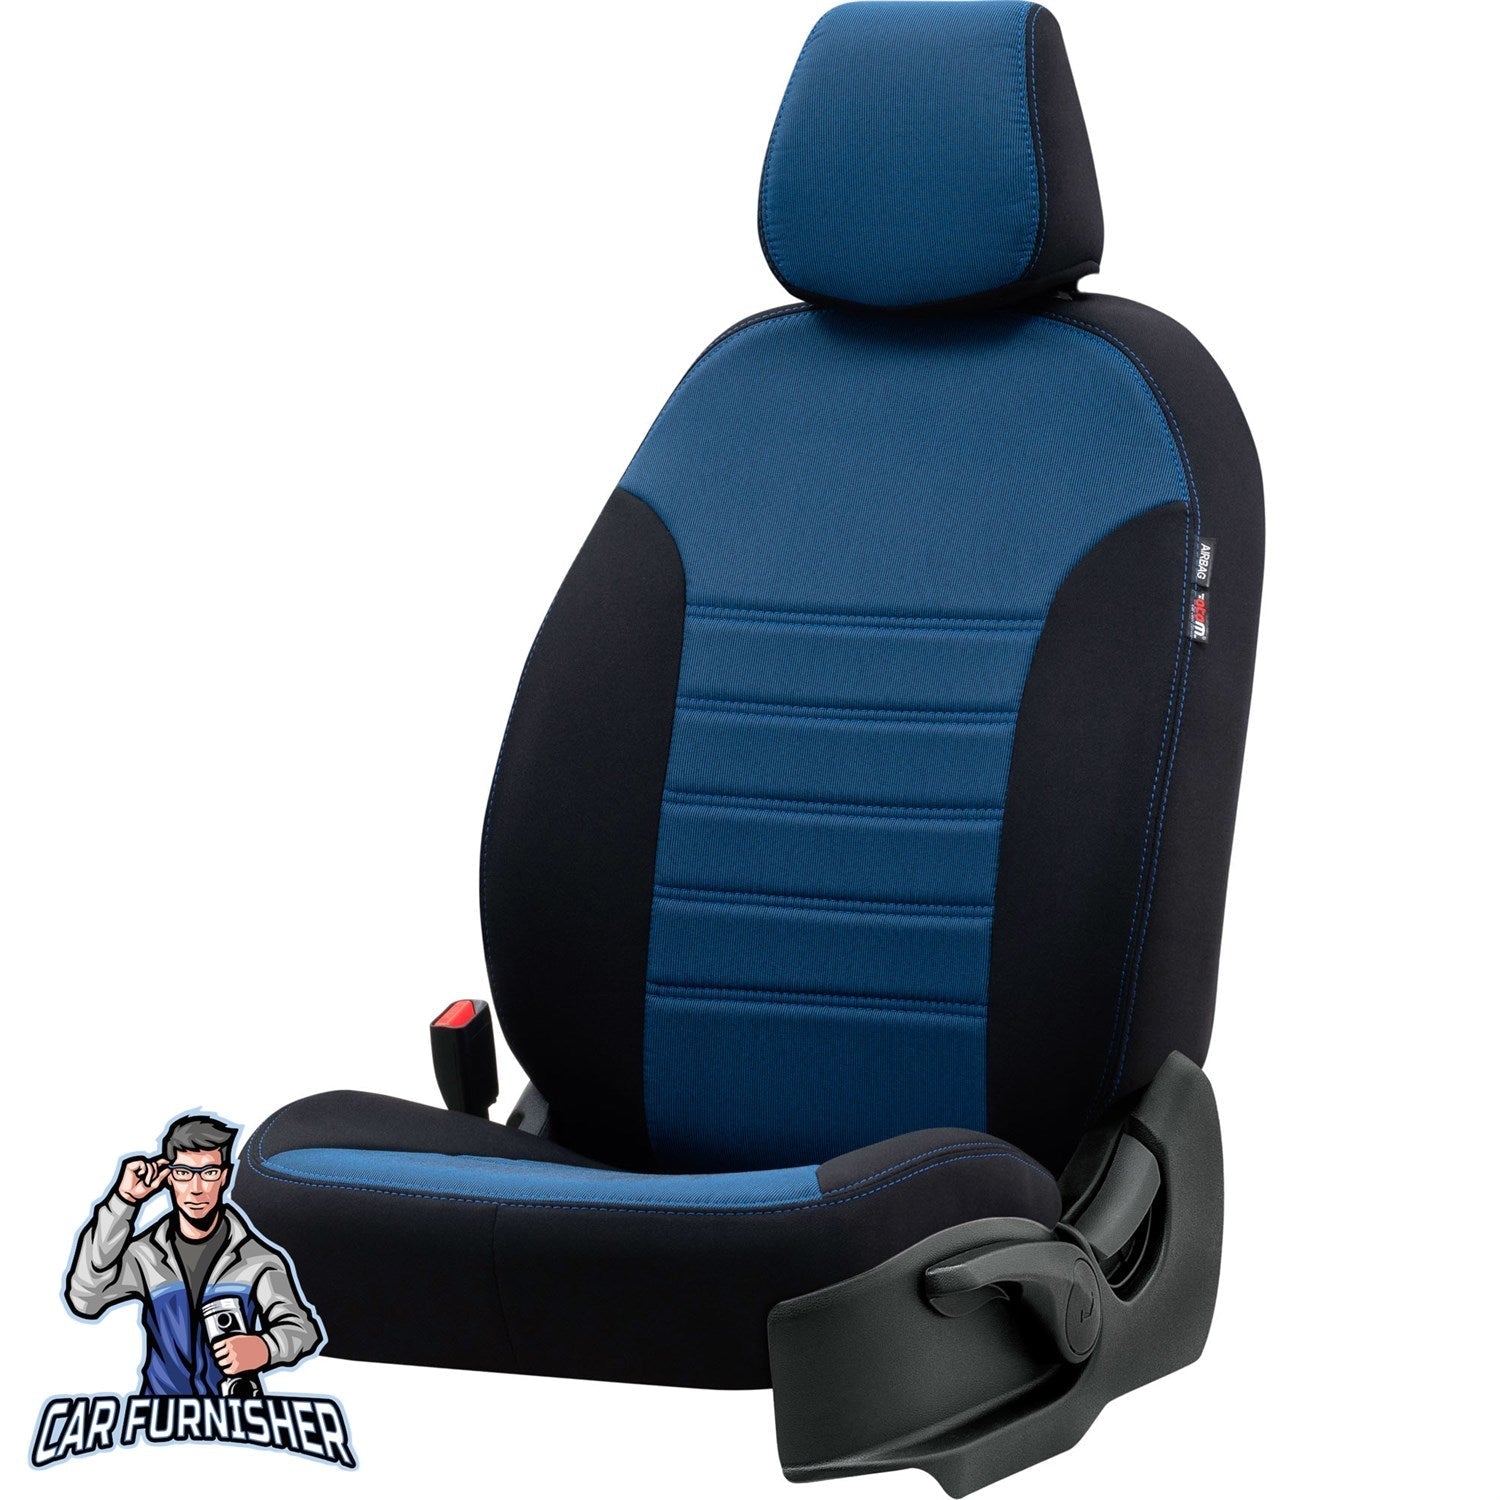 Skoda Fabia Seat Covers Original Jacquard Design Blue Jacquard Fabric